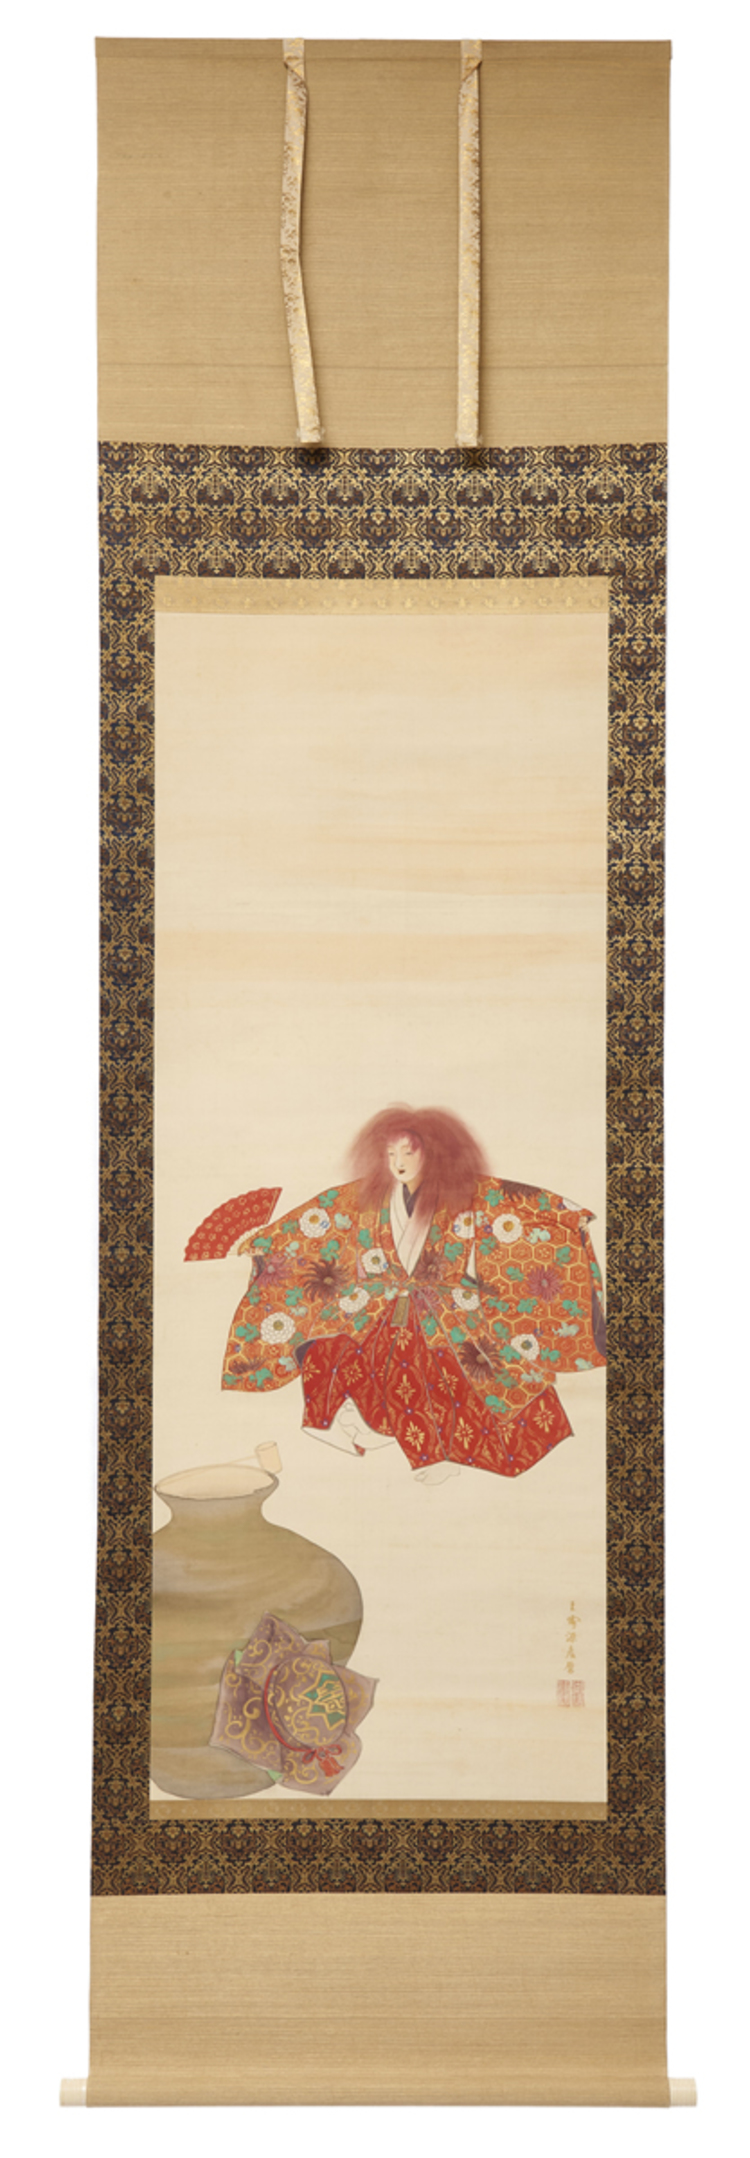 Hanging scroll (kakajiku) with a polychrome painting